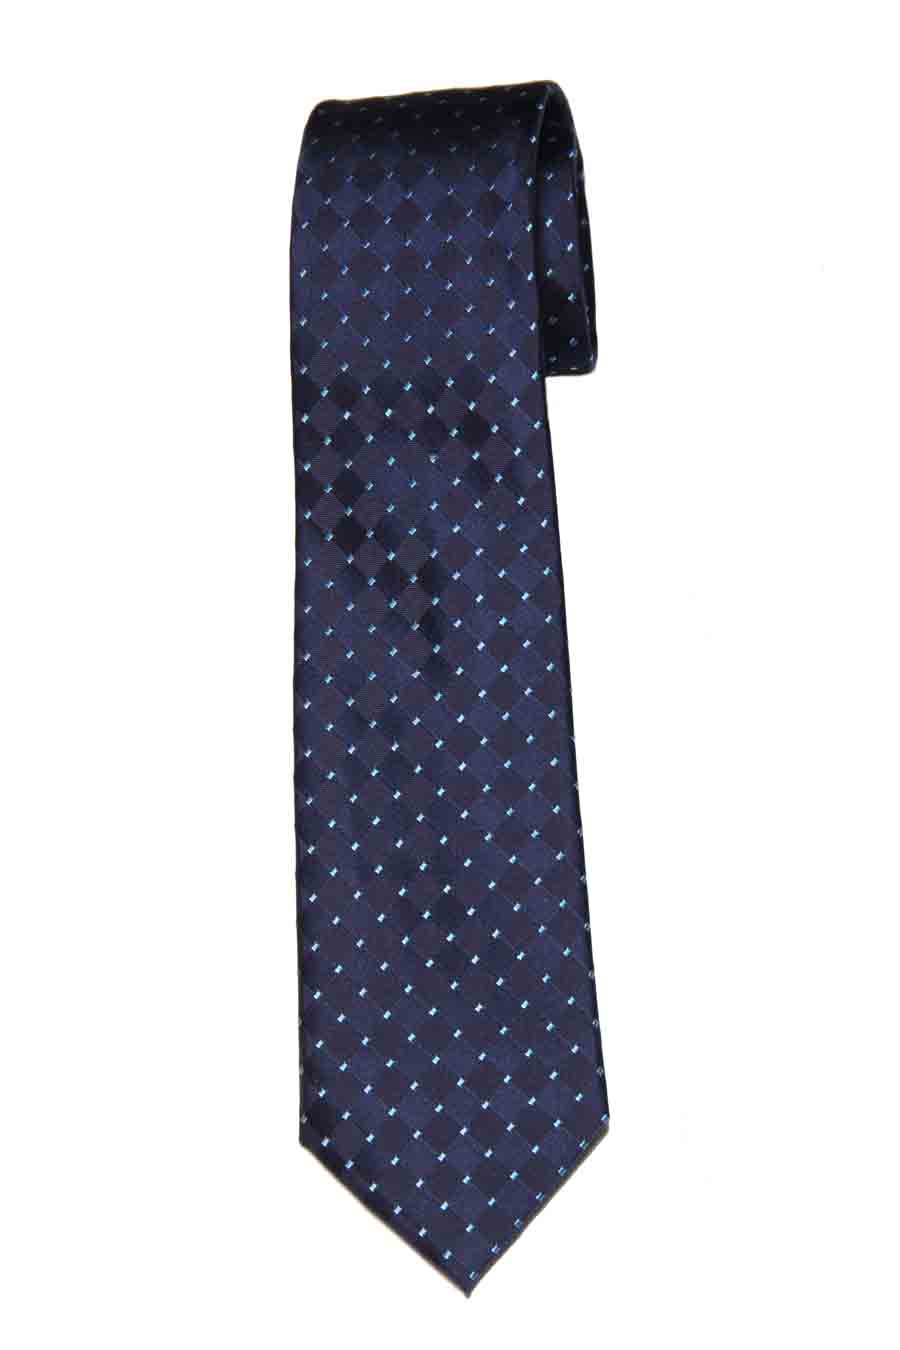 Michael Kors Silk Tie Navy Blue Geometric Pattern Men's